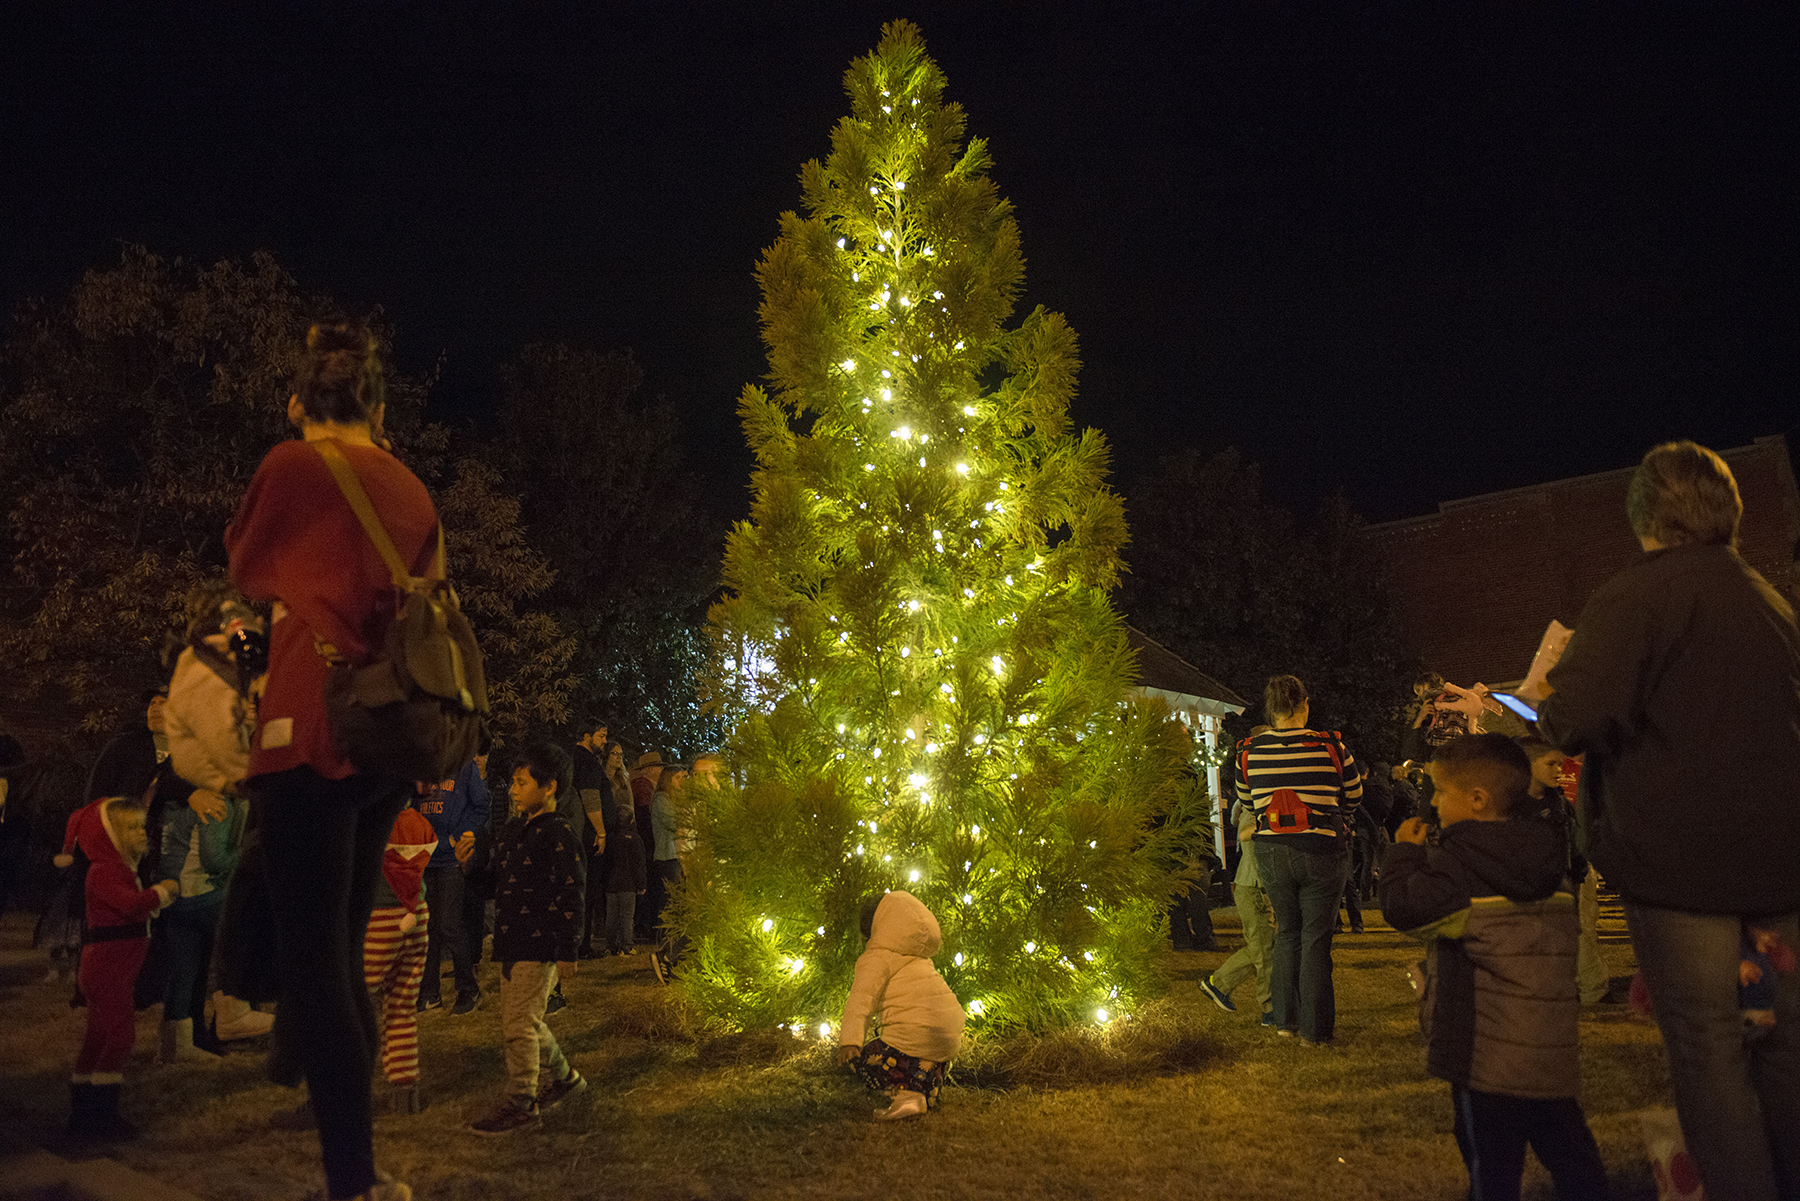 PHOTO GALLERY: Leeds Christmas Tree Lighting